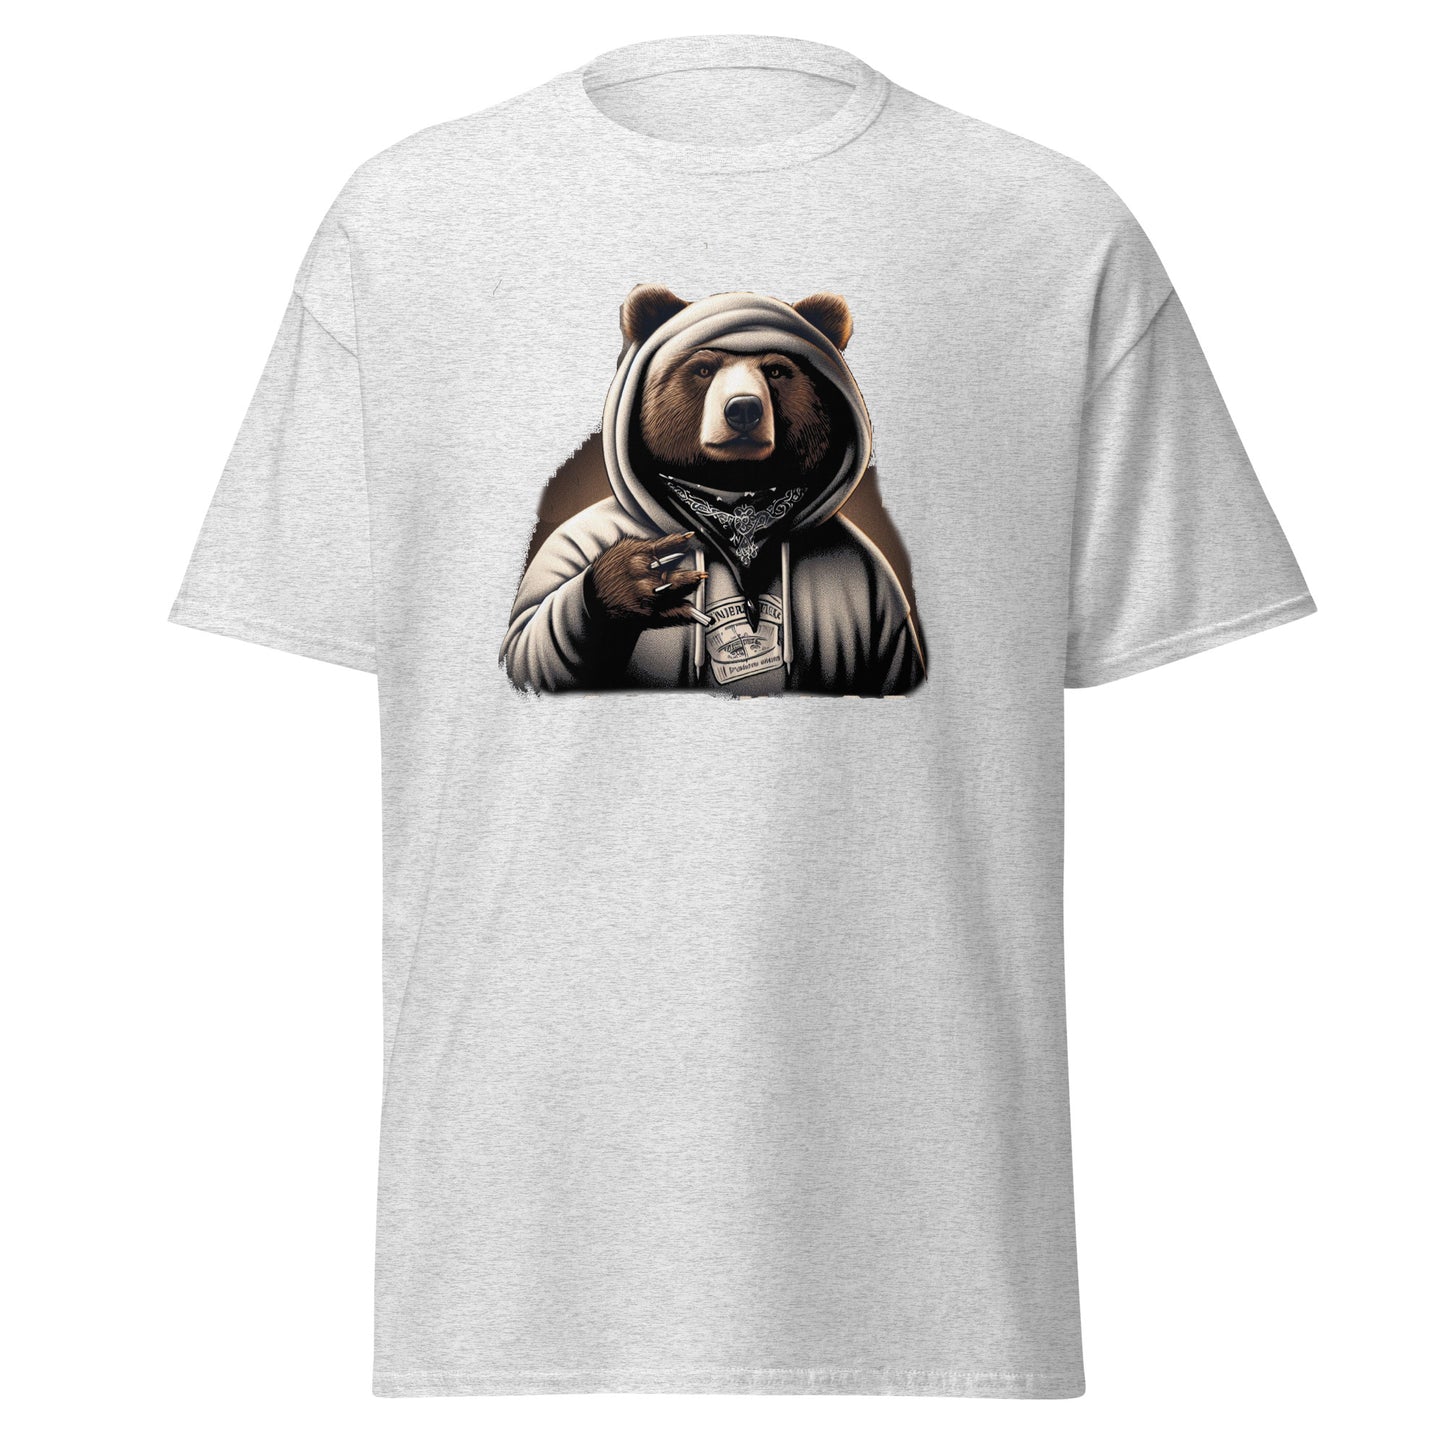 Urban Bear T-Shirt - City Living Wild